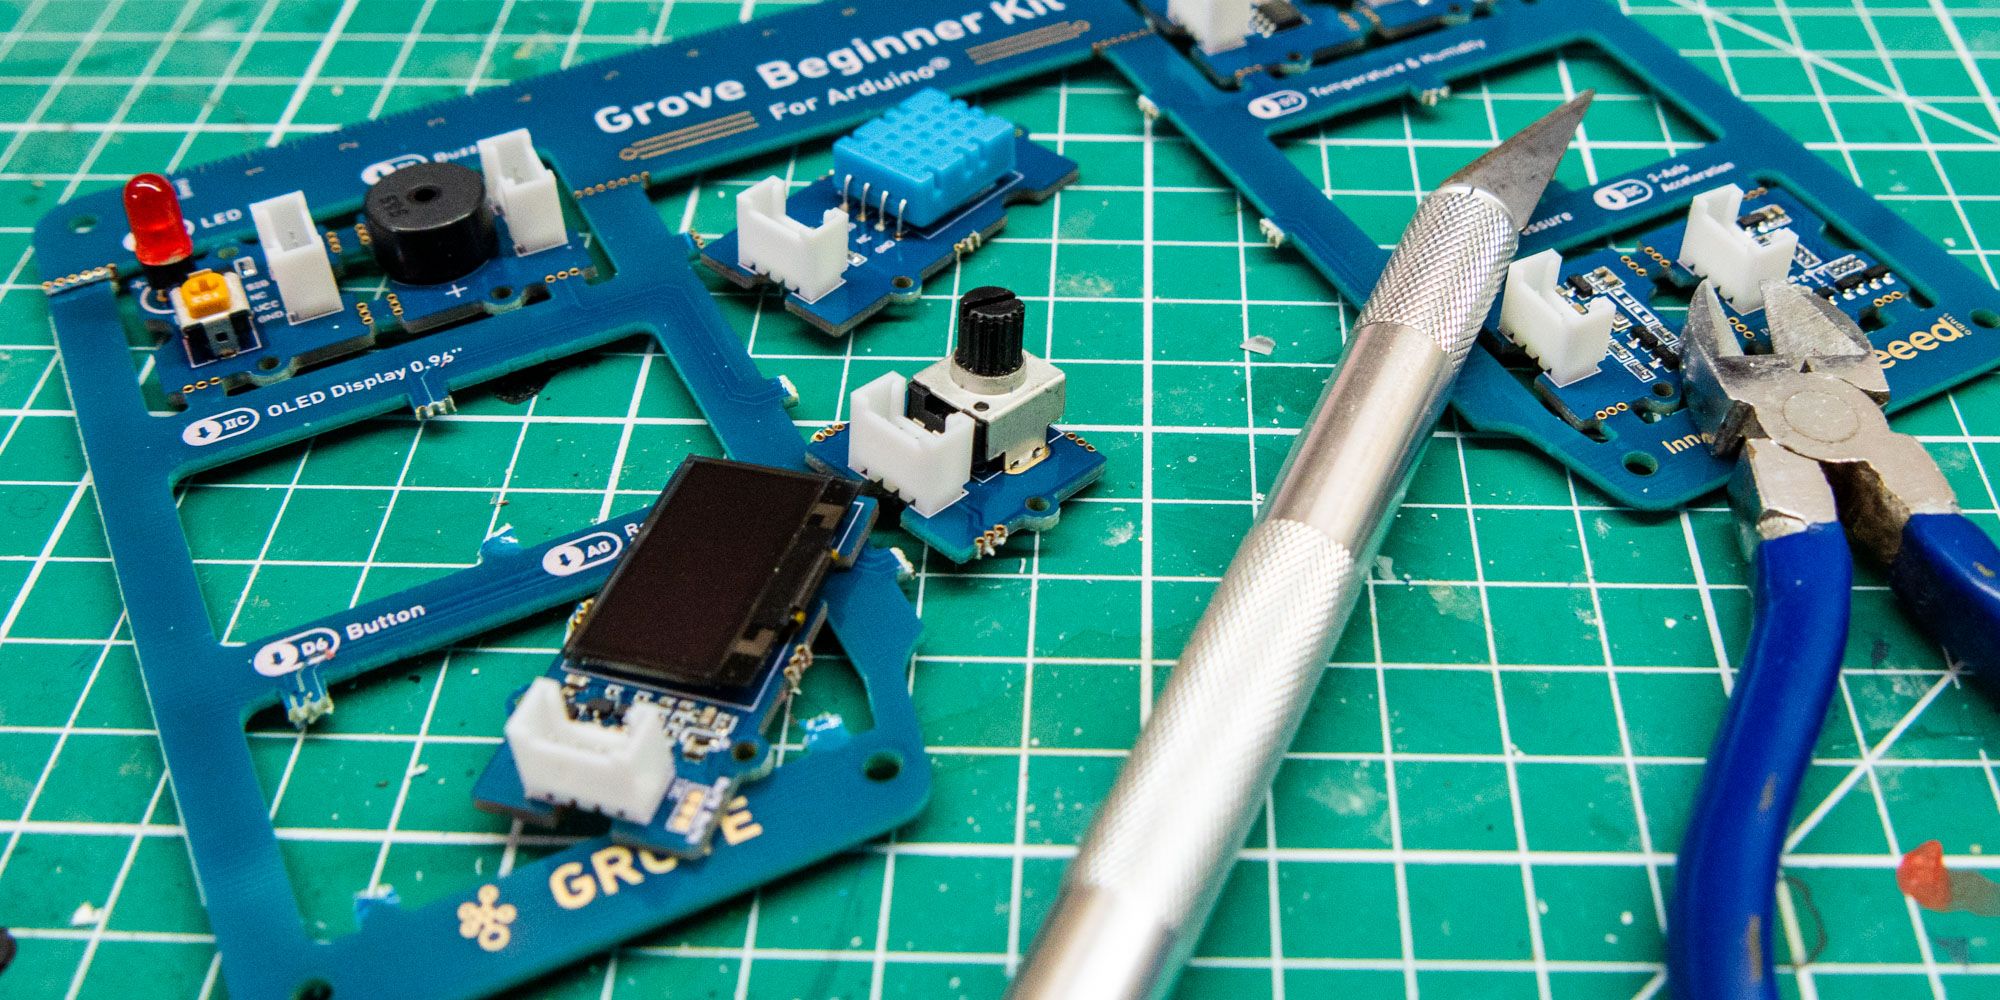 grove beginner kit cutting - Grove Beginner Kit for Arduino Review: il miglior kit di base per Arduino ancora